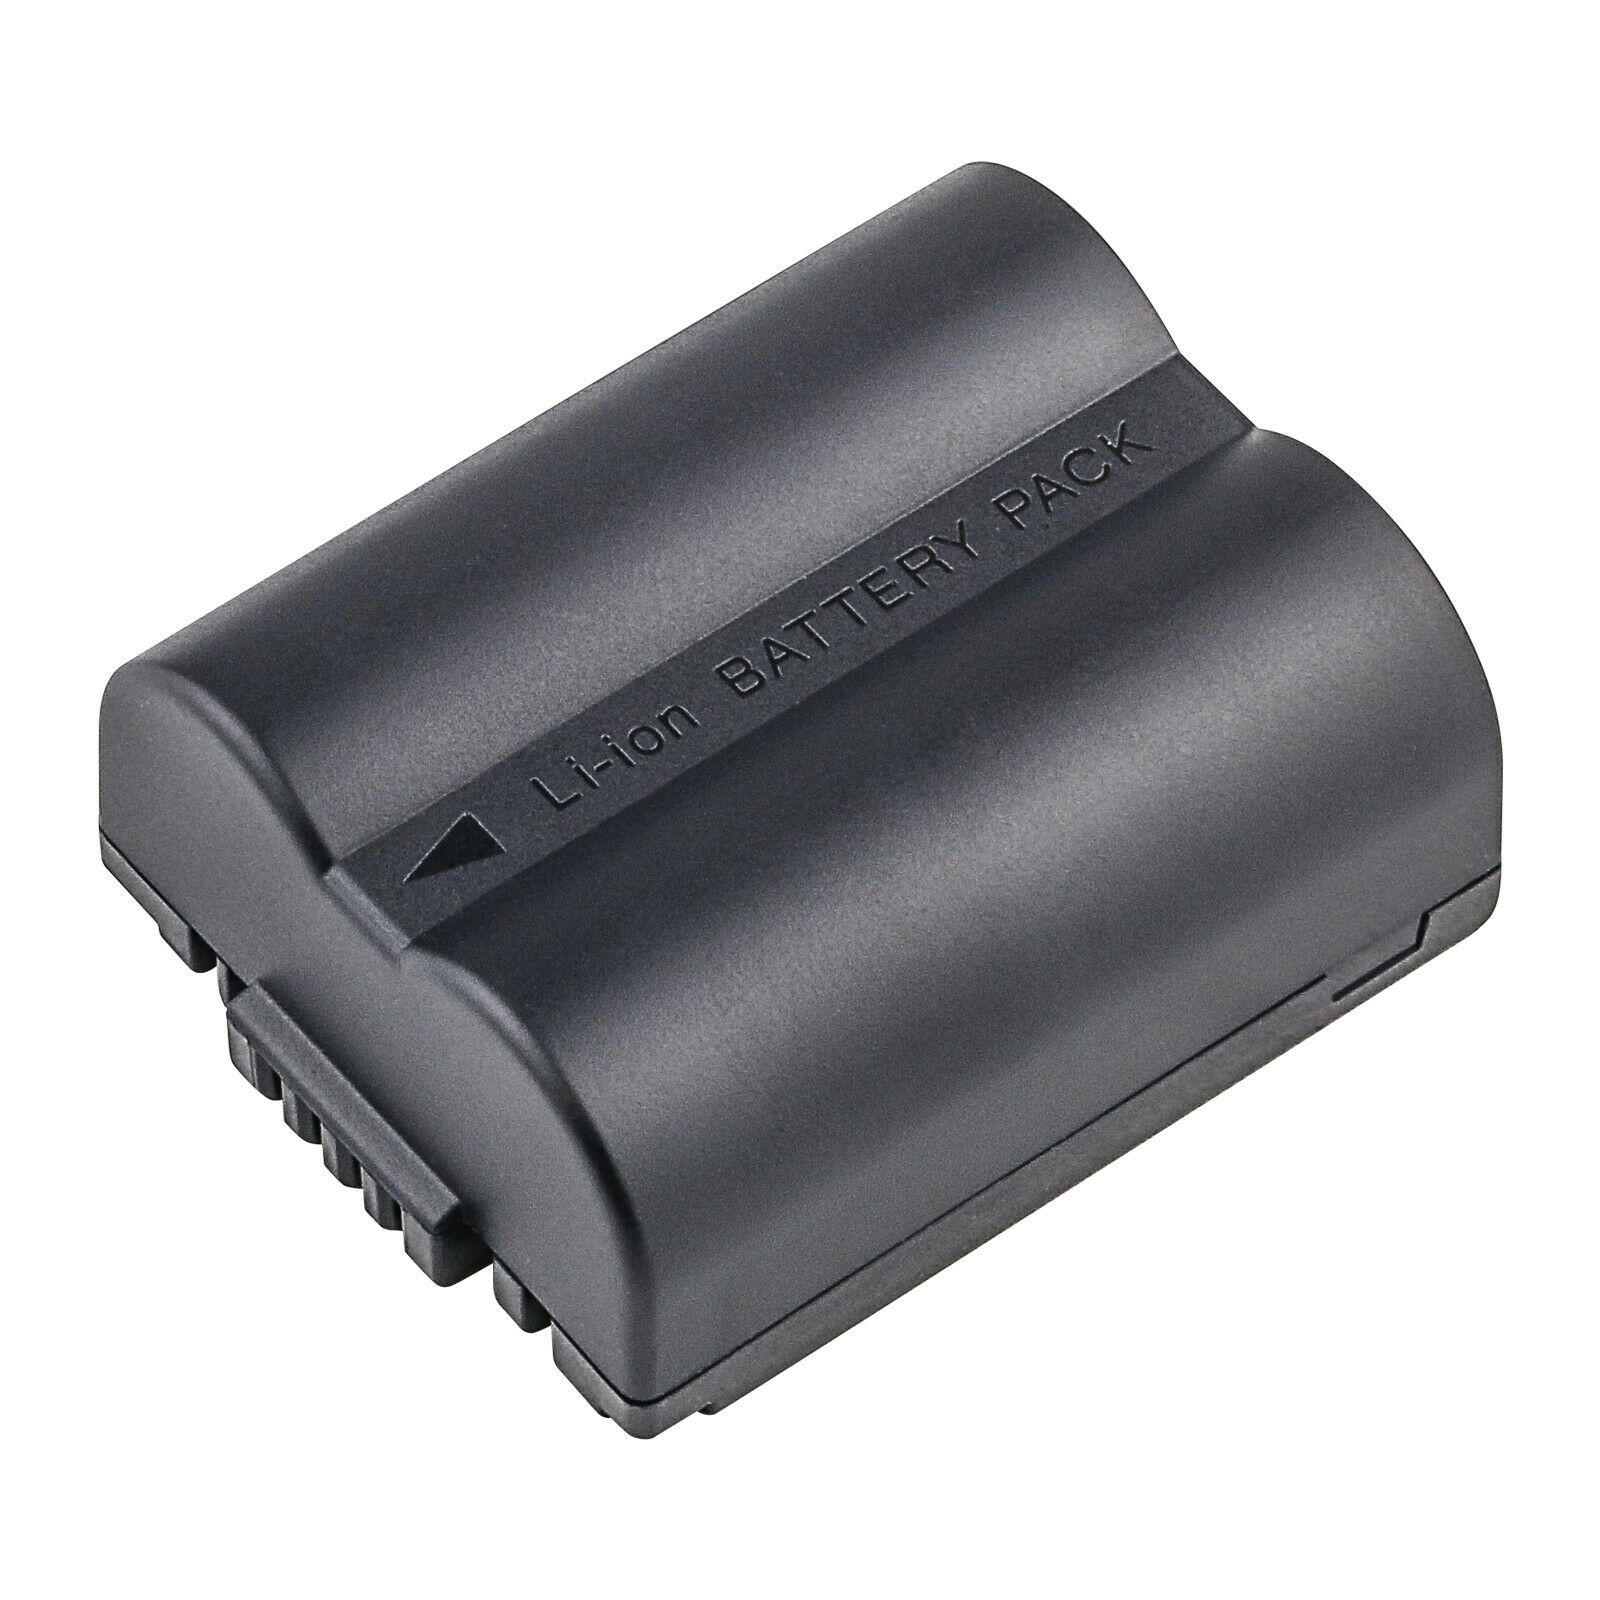 Panasonic Lumix DMC-FZ38K Camera Battery